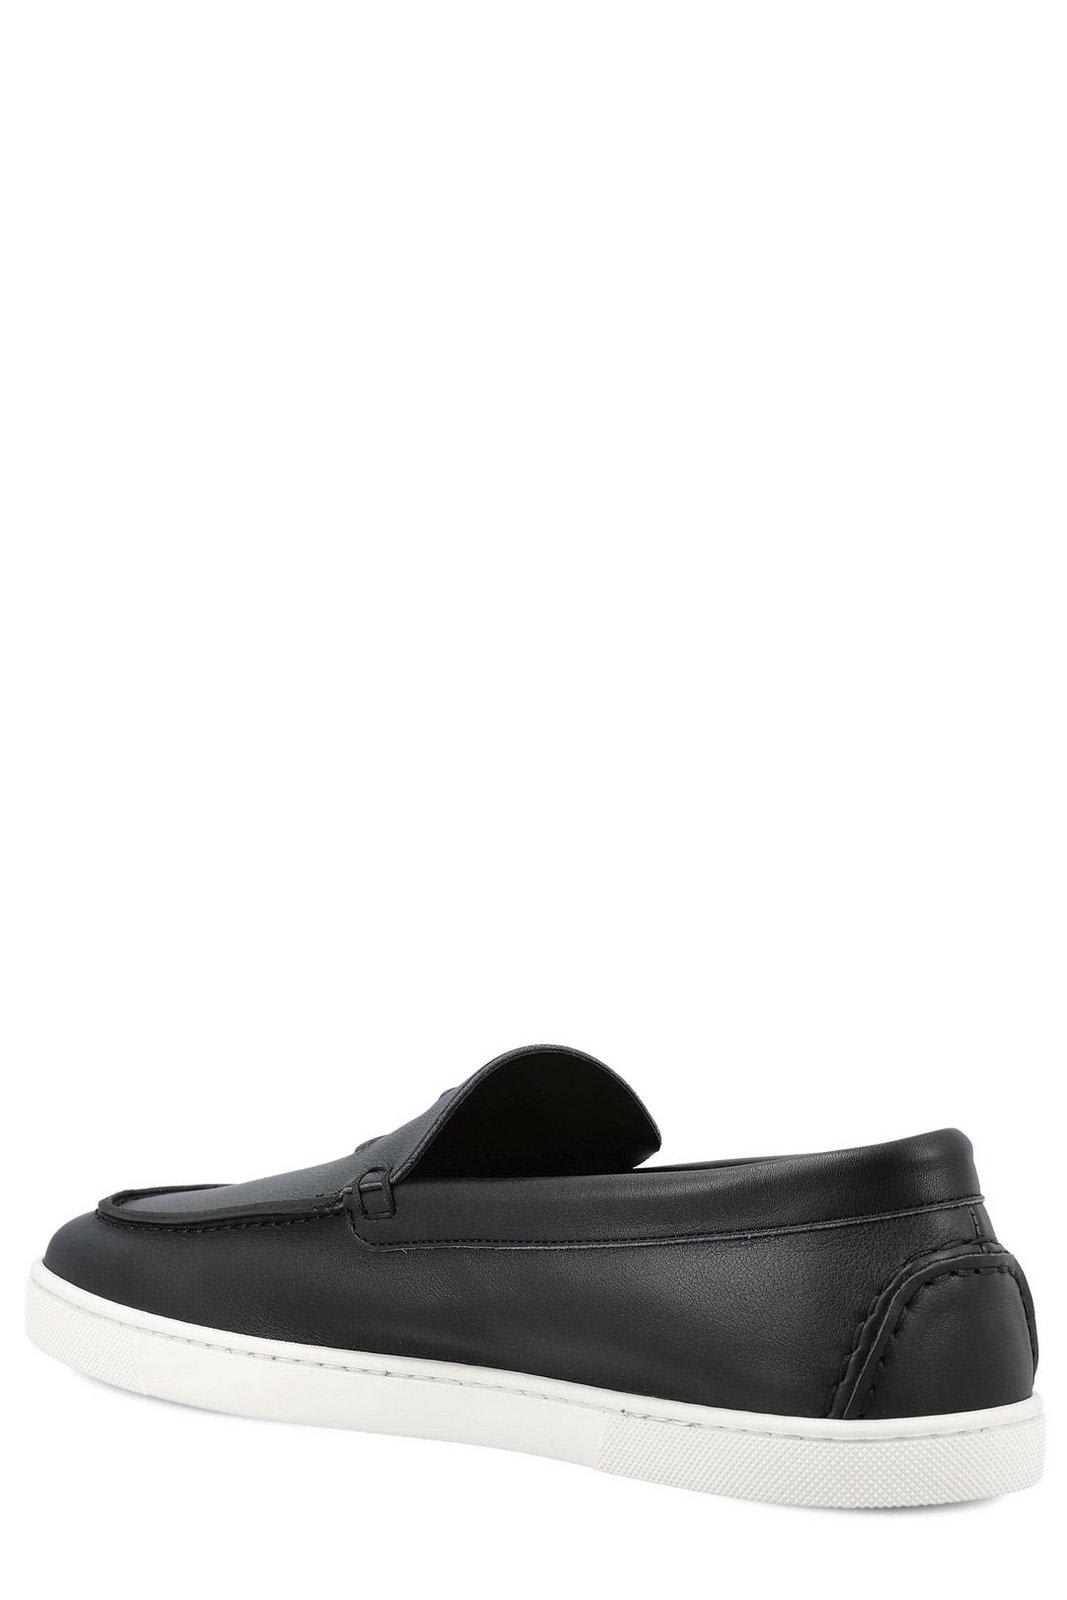 Shop Christian Louboutin Varsiboat Slip-on Loafers In Black